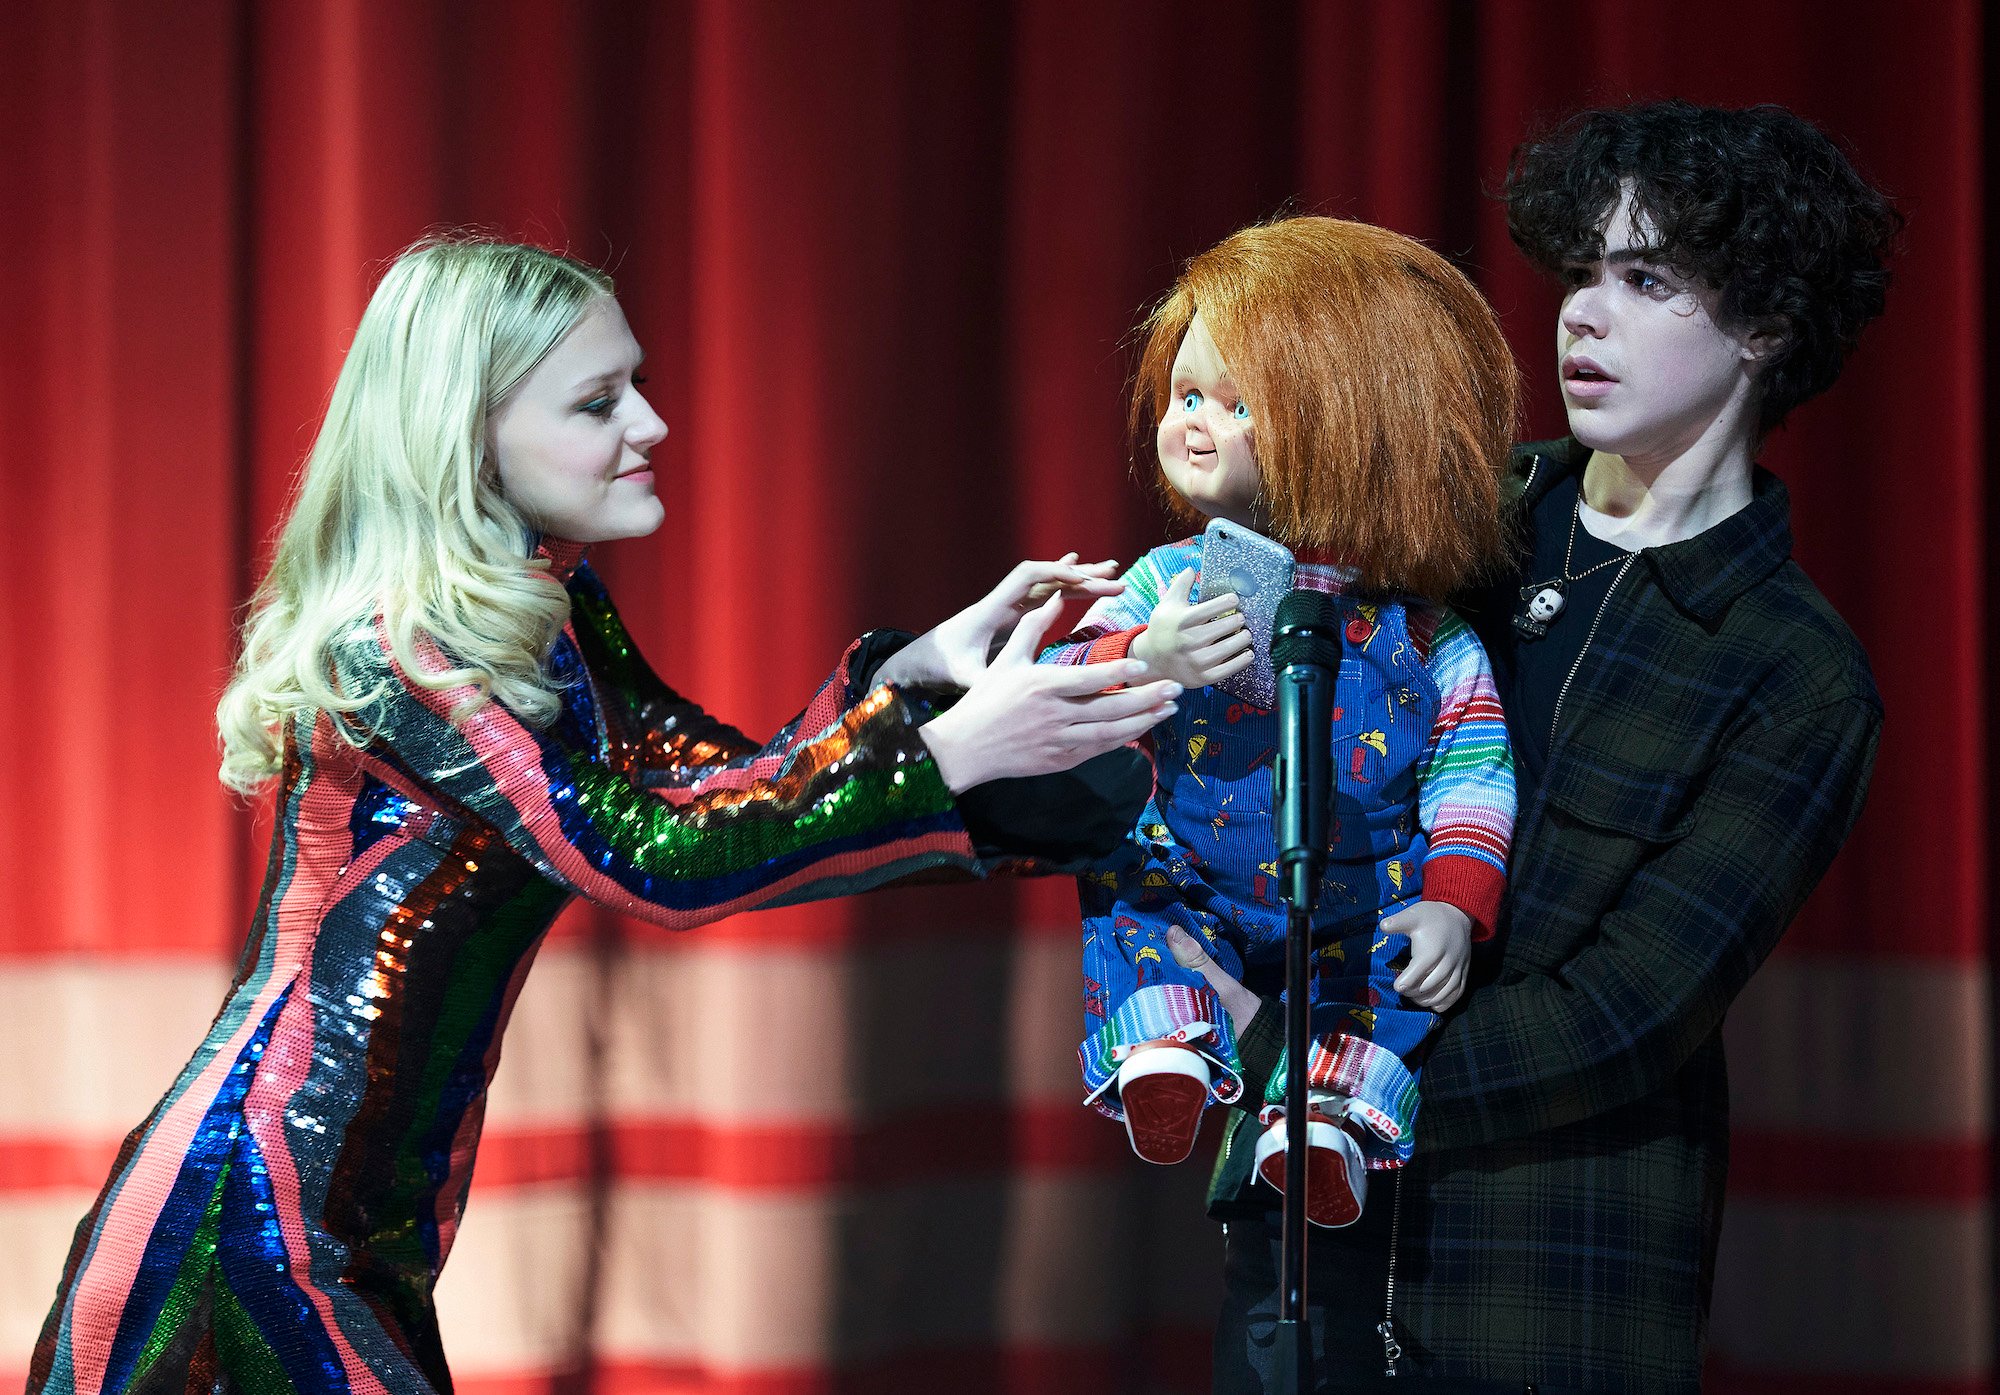 Alyvia Alyn Lind tries to take Chucky from Zackary Arthur